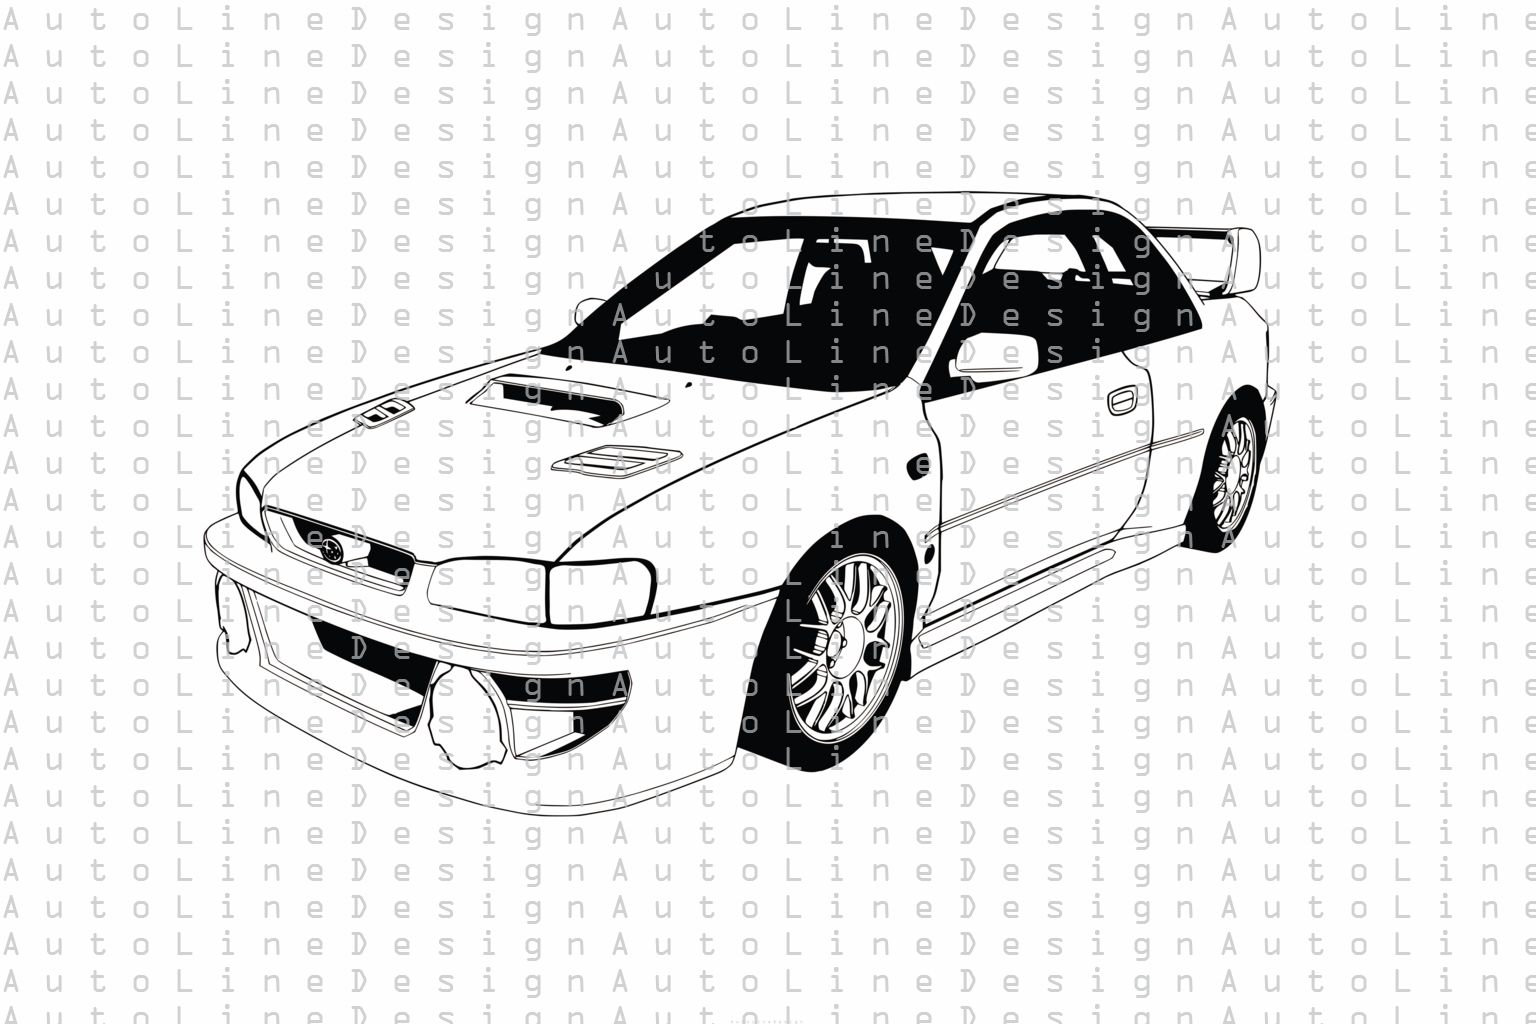 Subaru Impreza WRX STI 1997 SVG Pdf Dxf Eps Png GC8D GC8E